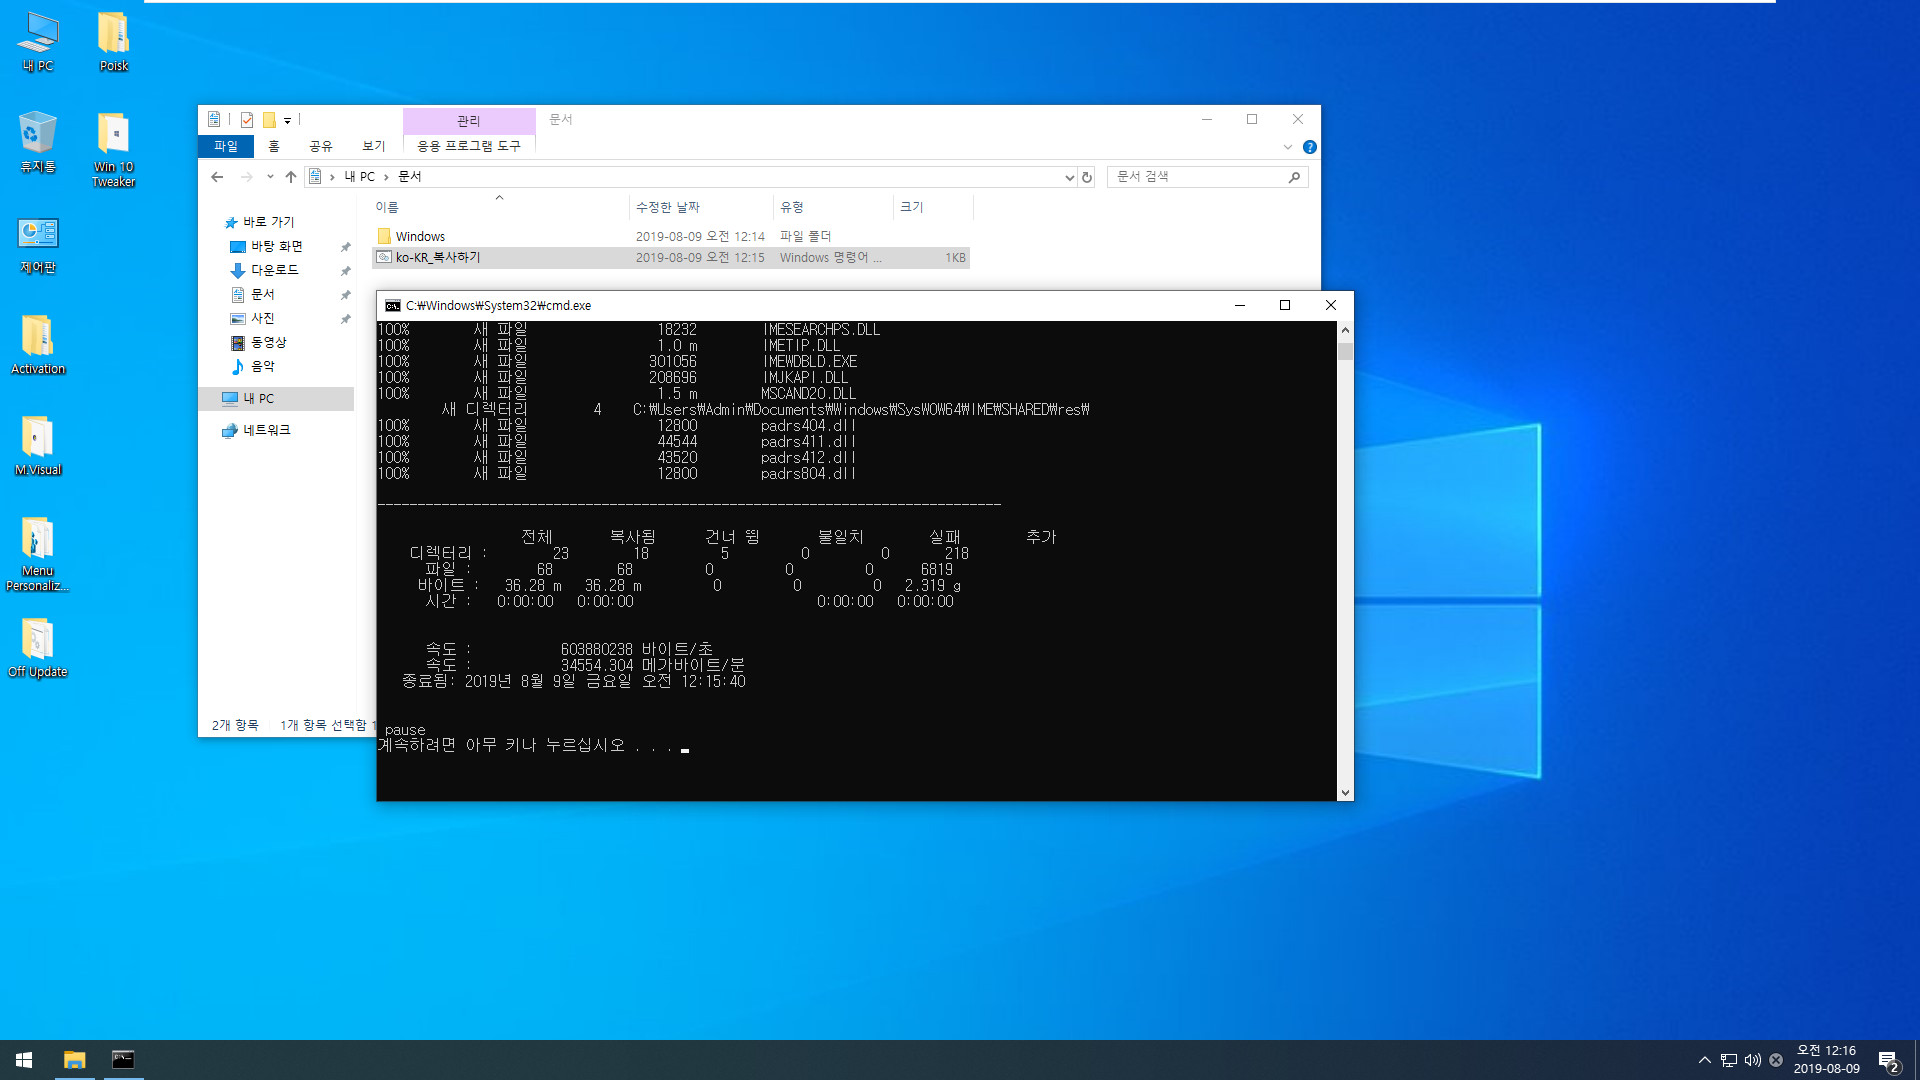 Windows 10 Enterprise x64 lite 1903 build 18362.267 by Zosma.iso - 러시아어 한글화 시도 - 그래서 그냥 원본대로 설치 후에 한글화 시도 - 집앞의 큰OO님 올려주신 파일로 한글 입력 해결 2019-08-09_001605.jpg